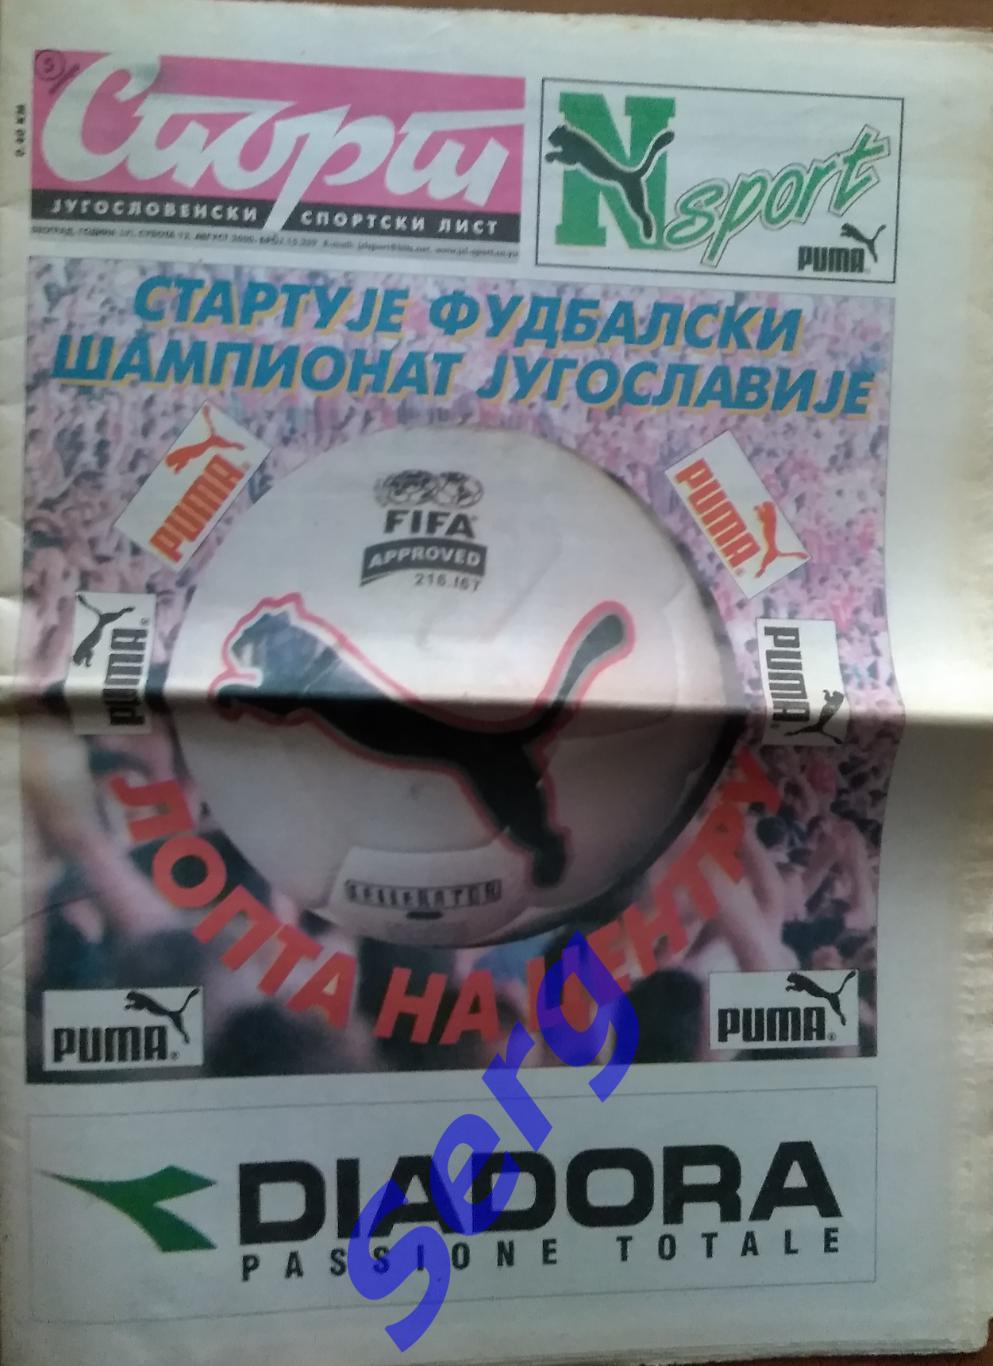 Газета Спорт/Спорт 12 августа 2000 год. Белград, Югославия